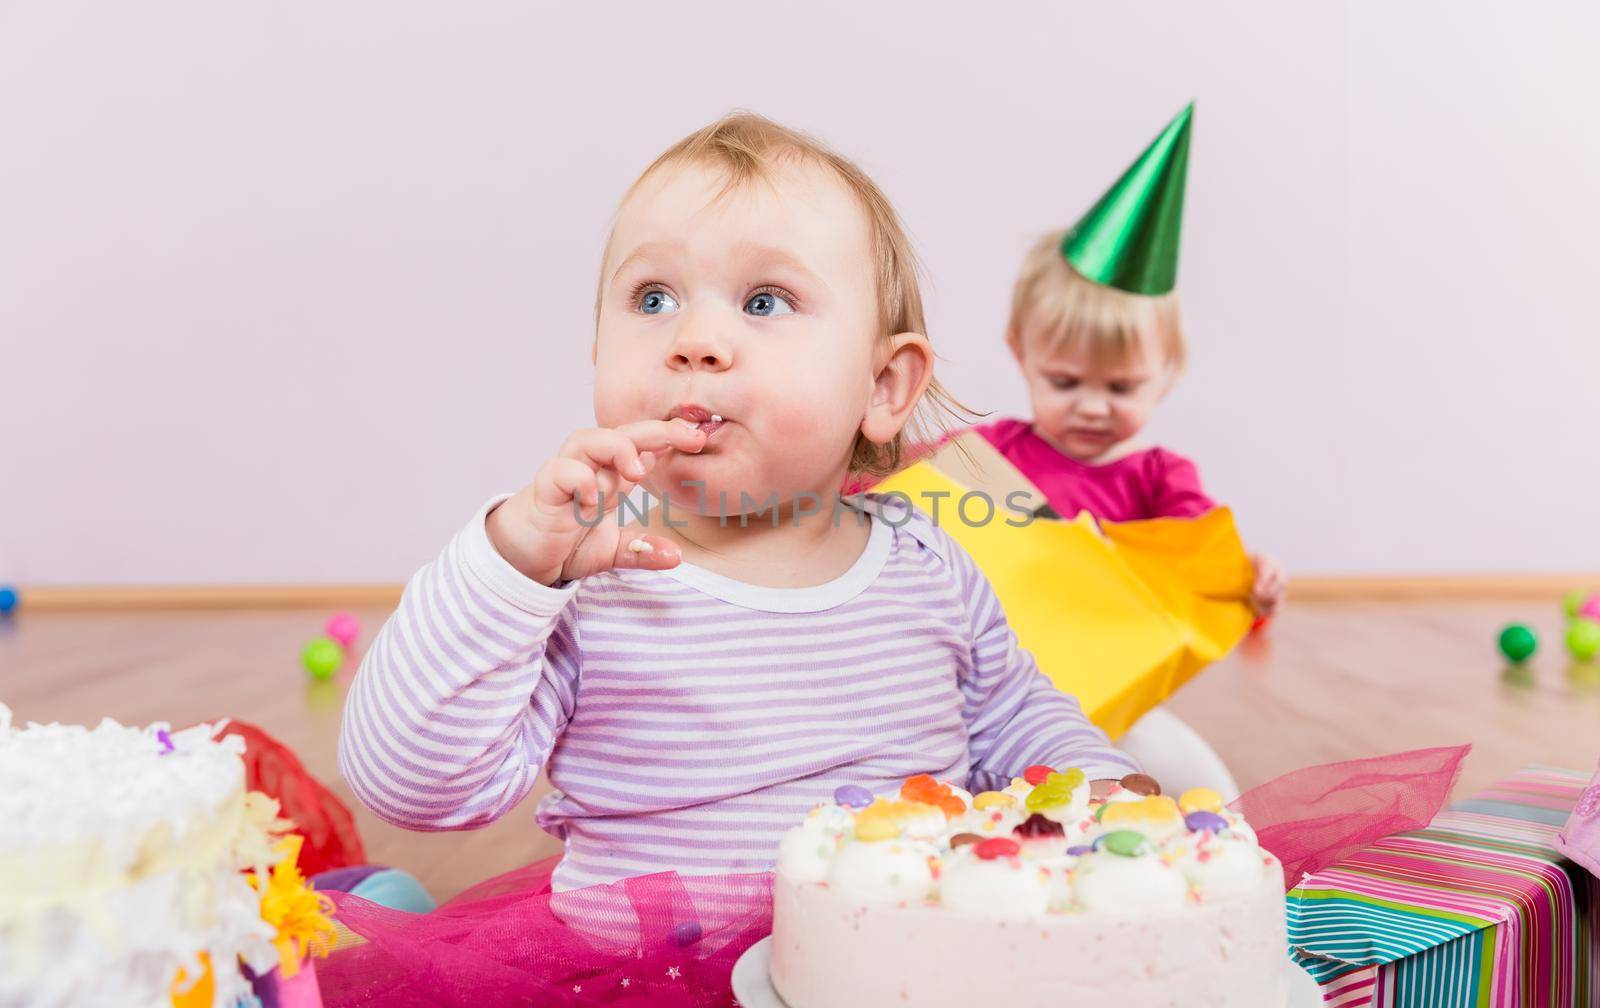 Toddler eating birthday cake by Kzenon